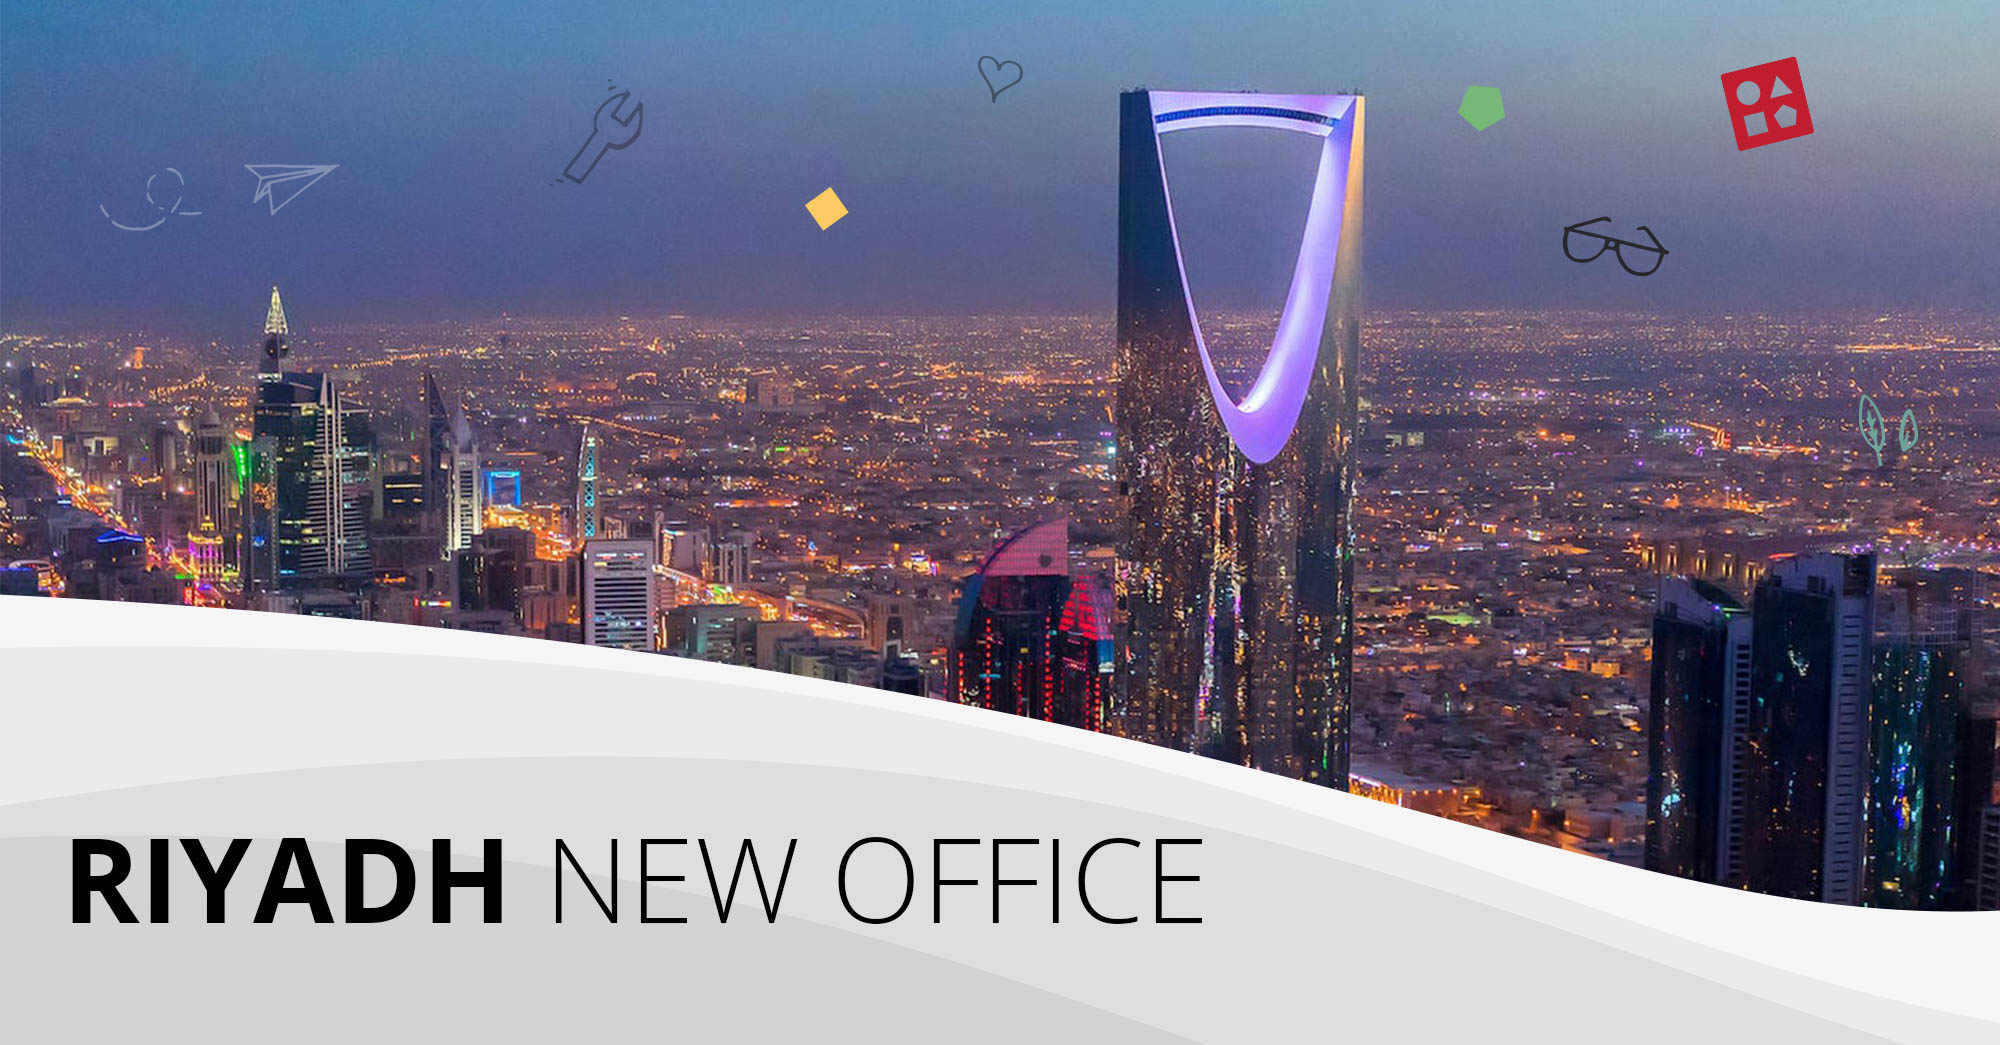 We’ve got a new office in Riyadh